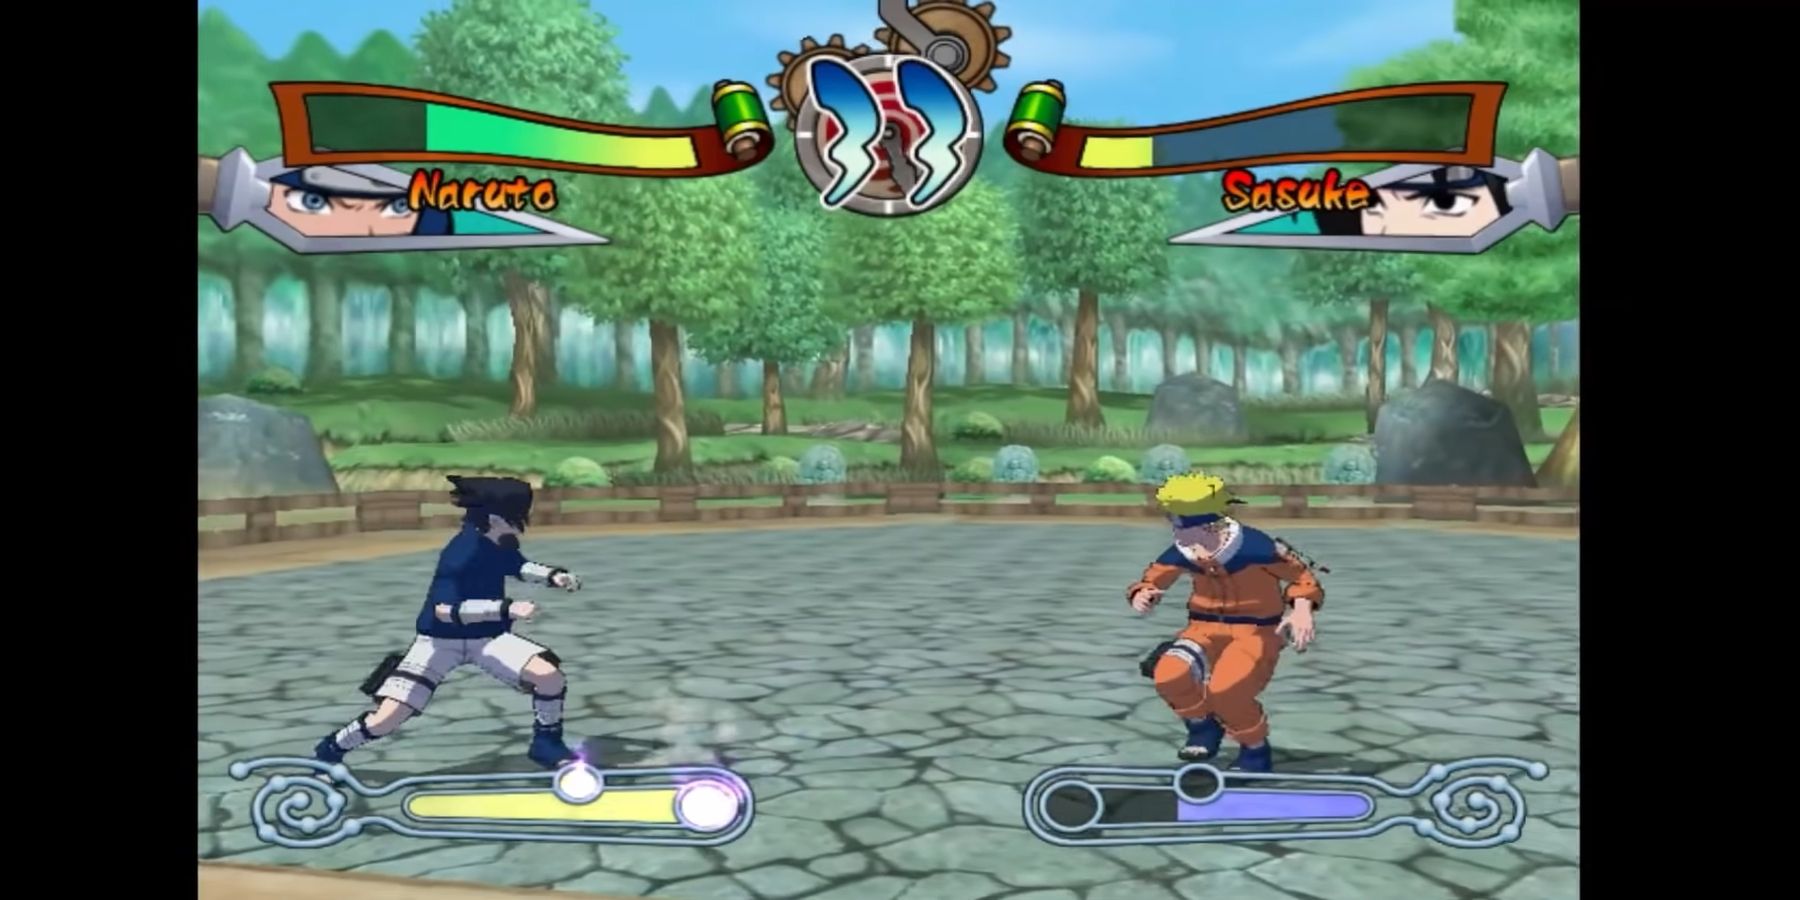 Sasuke moving towards Naruto while the latter is stepping back.